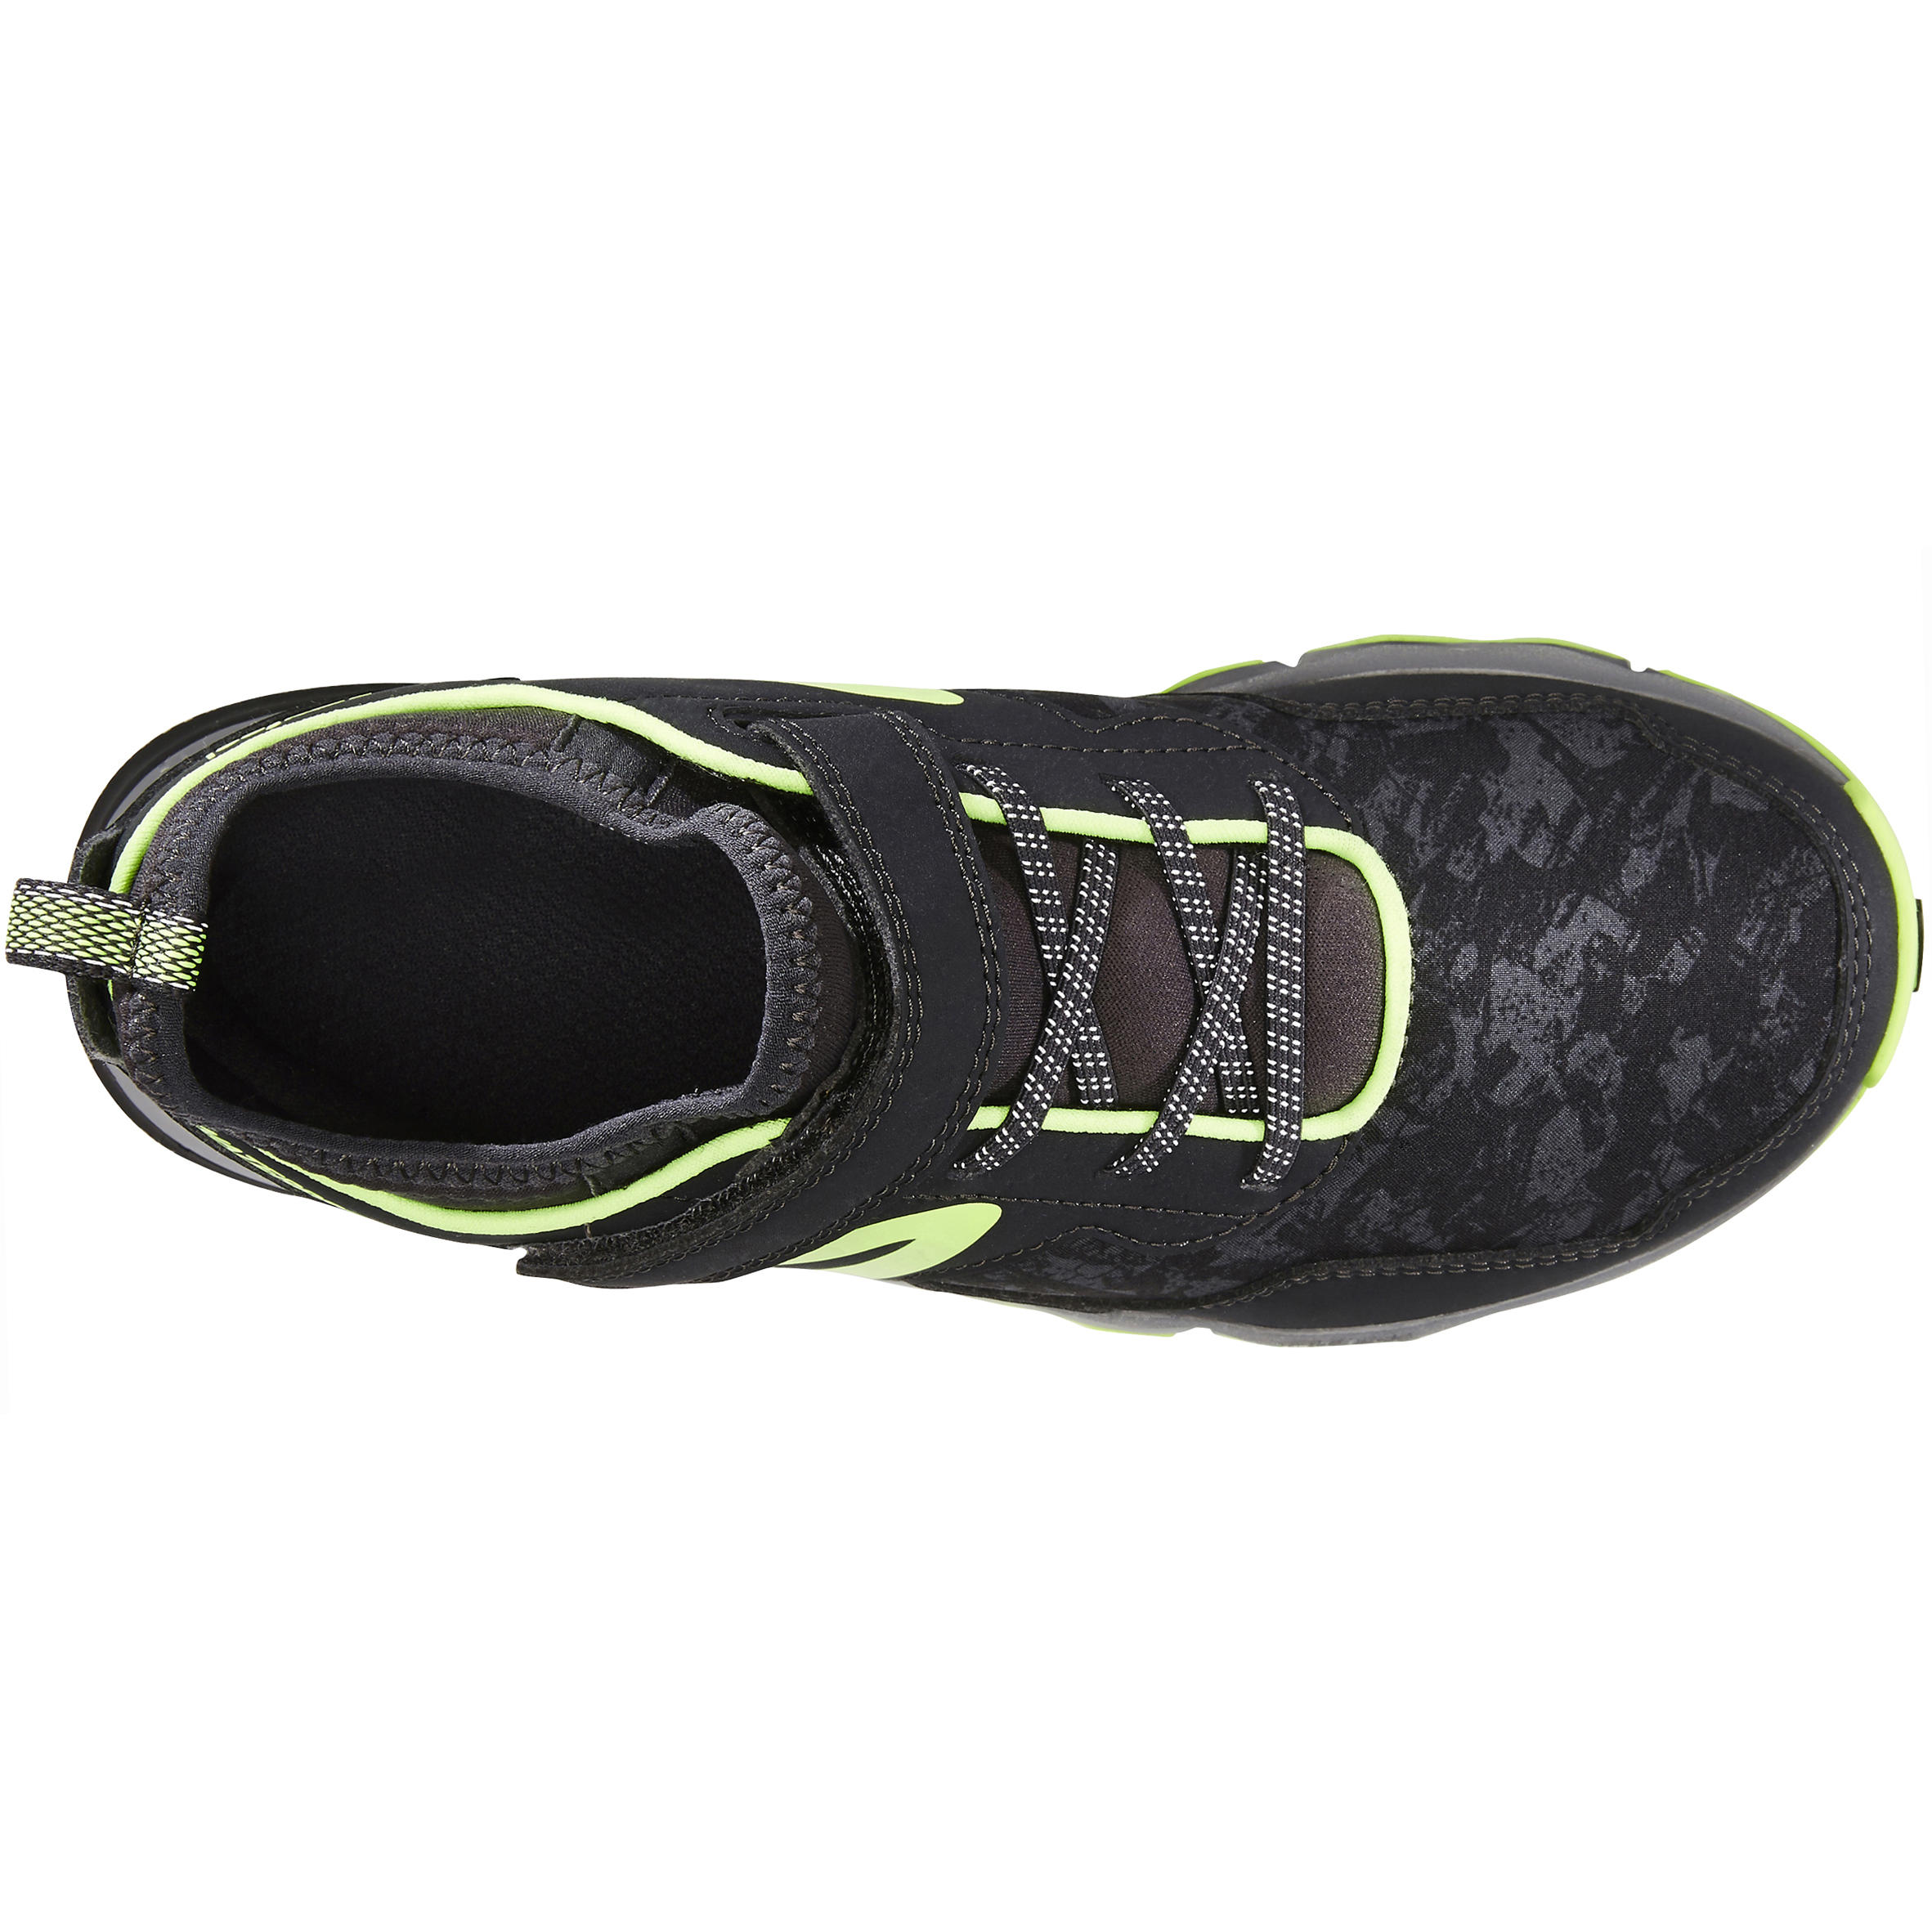 NW 580 Children's Nordic Walking Shoes grey green 5/11